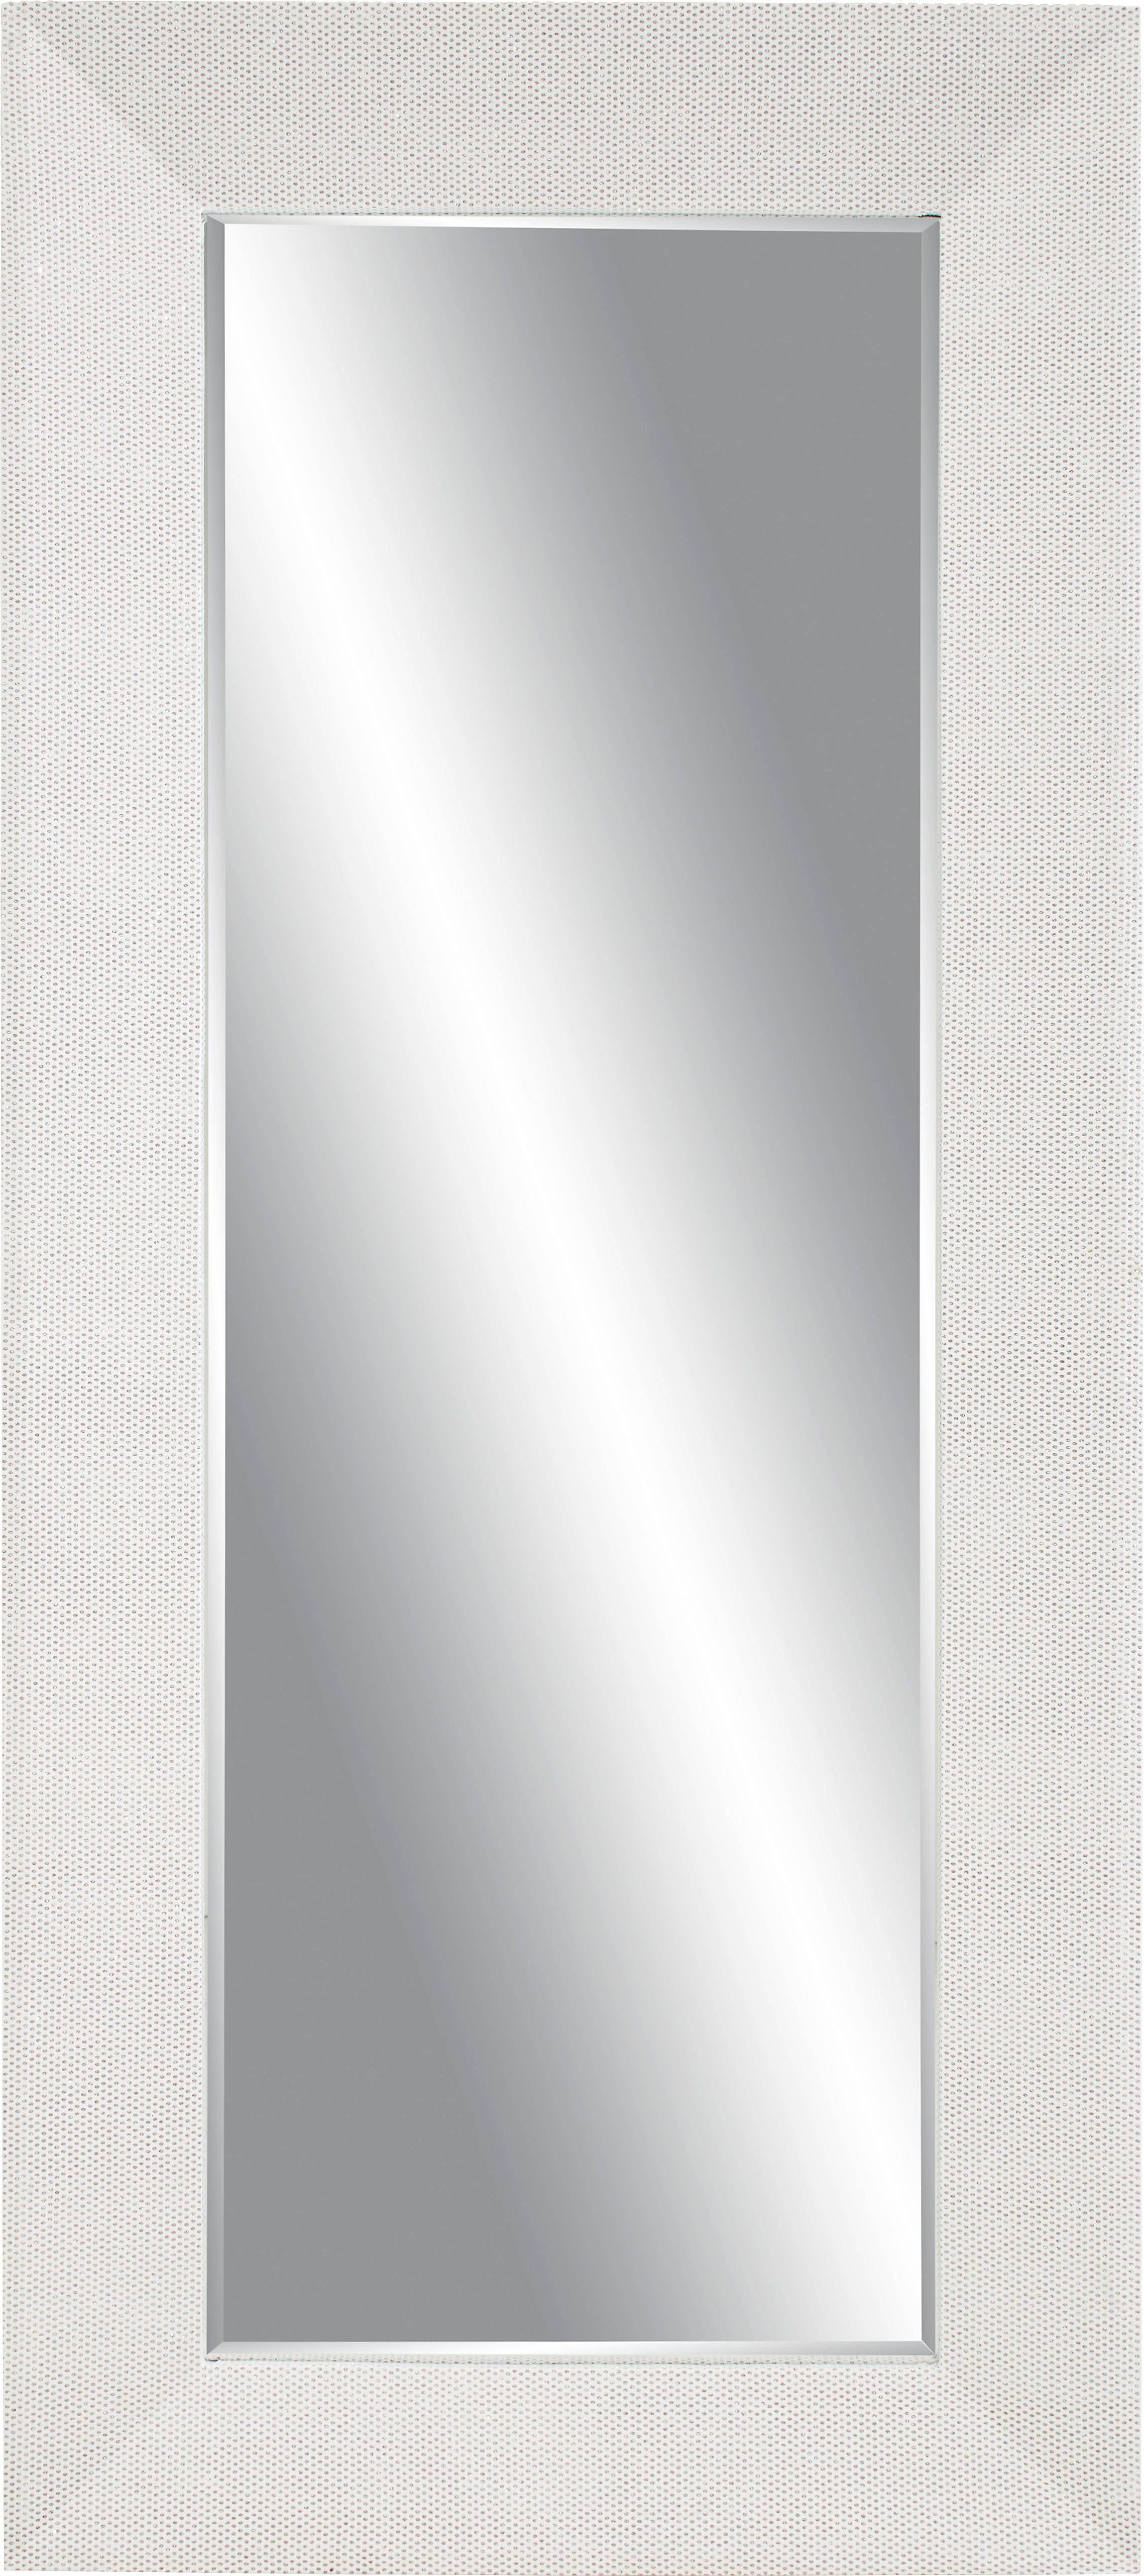 Wandspiegel ca. 80x180x5cm - Silberfarben, Glas/Holz (80/180/5cm) - Modern Living